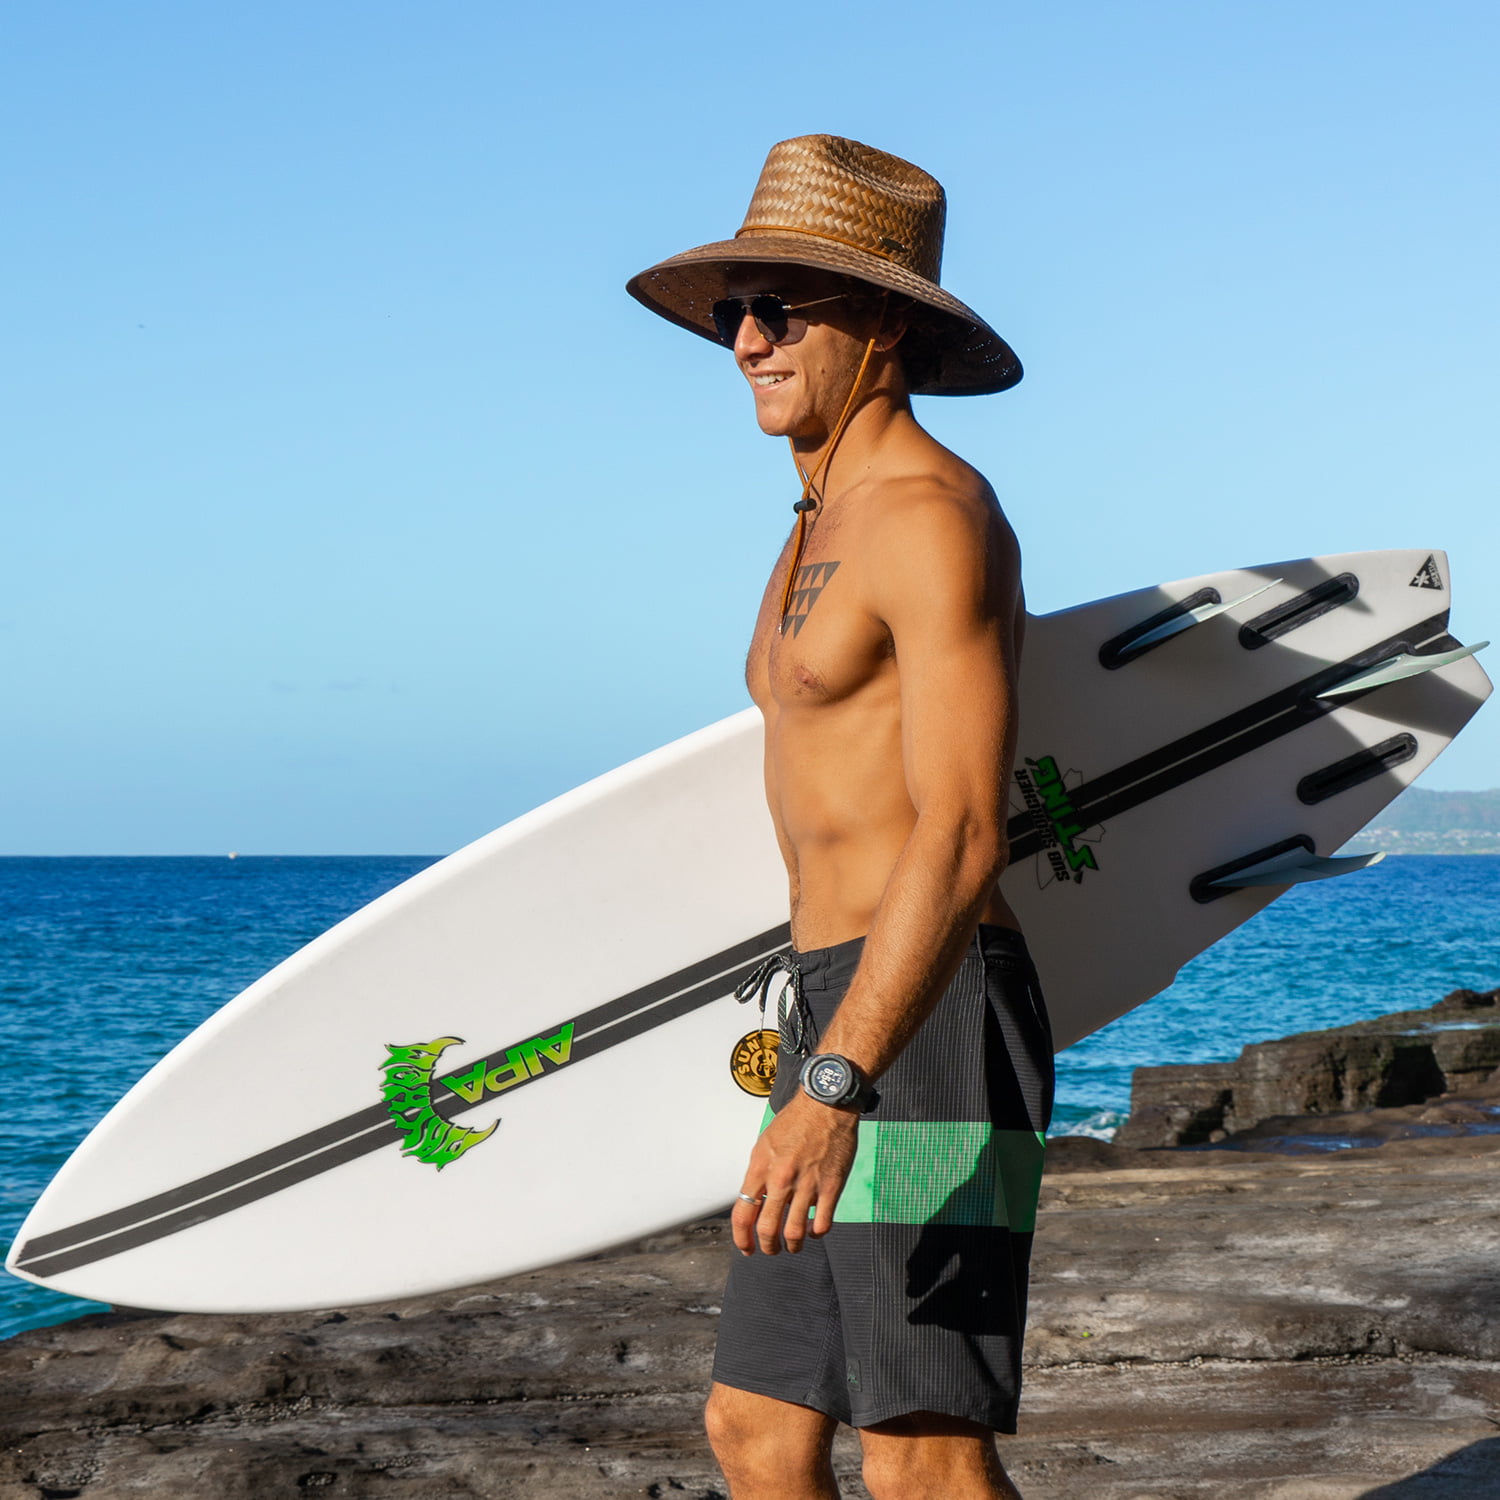 Panama Jack Lifeguard Sun Hat - Palm Fiber Straw, 5 Bound Big Brim, Chin  Strap with Toggle, Logo Badge (Natural, One Size Fits Most) 